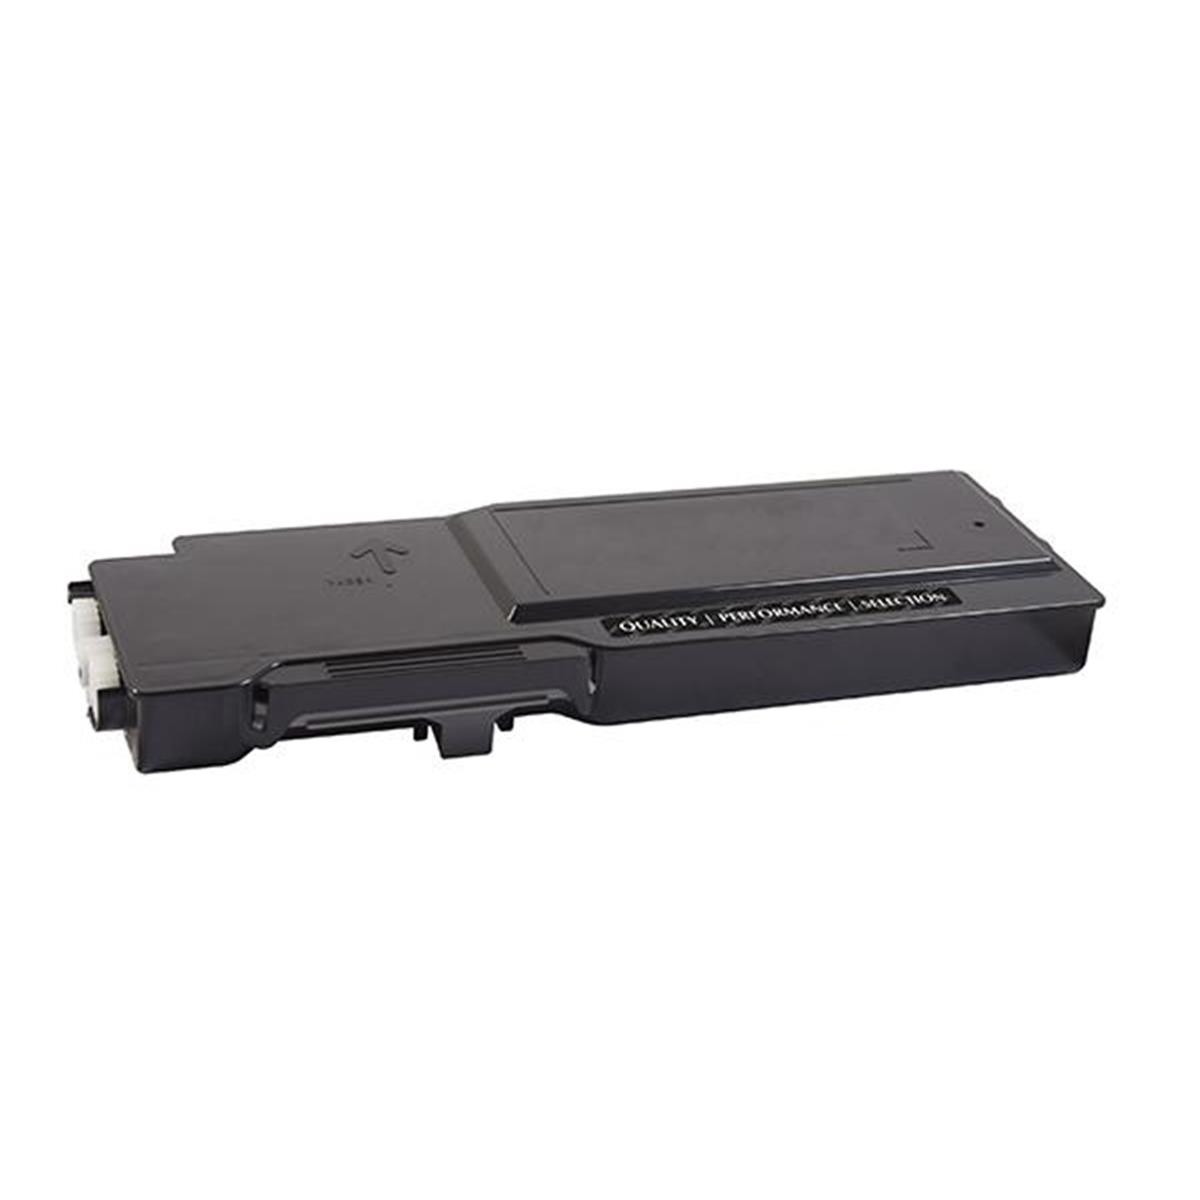 Picture of CIG 201136 Black Metered Toner Cartridge for Xerox 106R02240